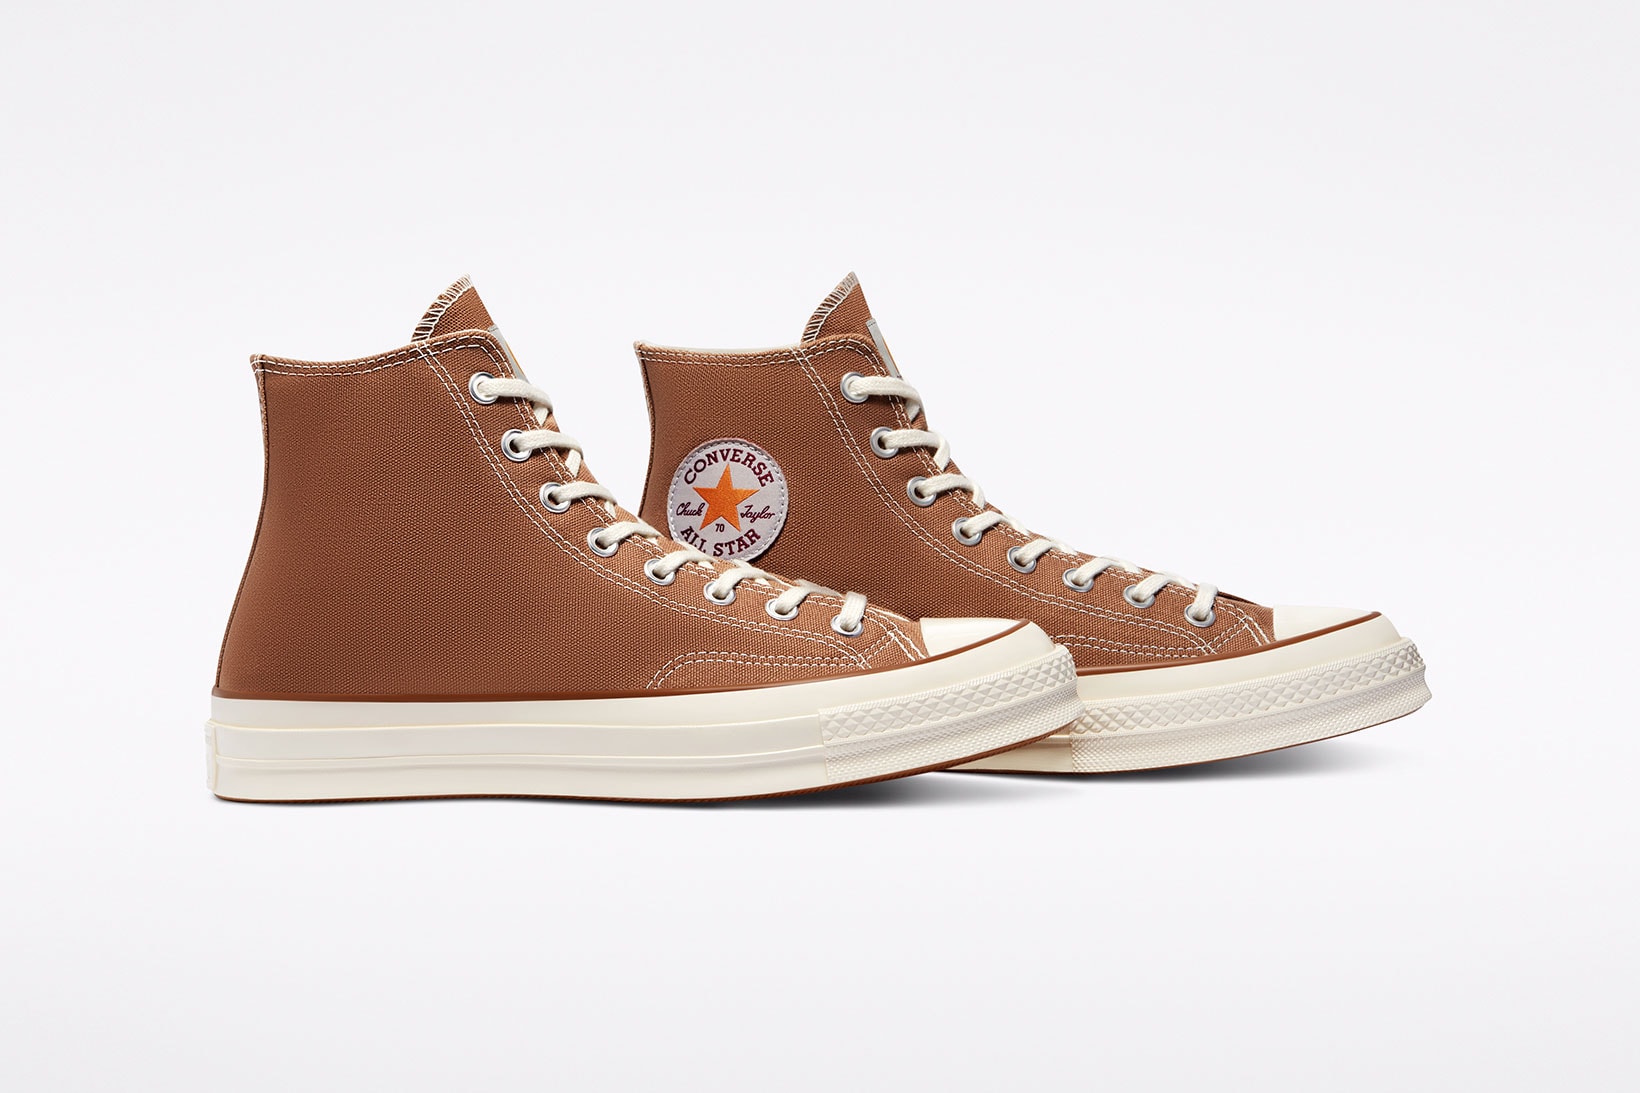 carhartt wip converse chuck 70 icons collaboration sneakers hamilton brown canvas logo side